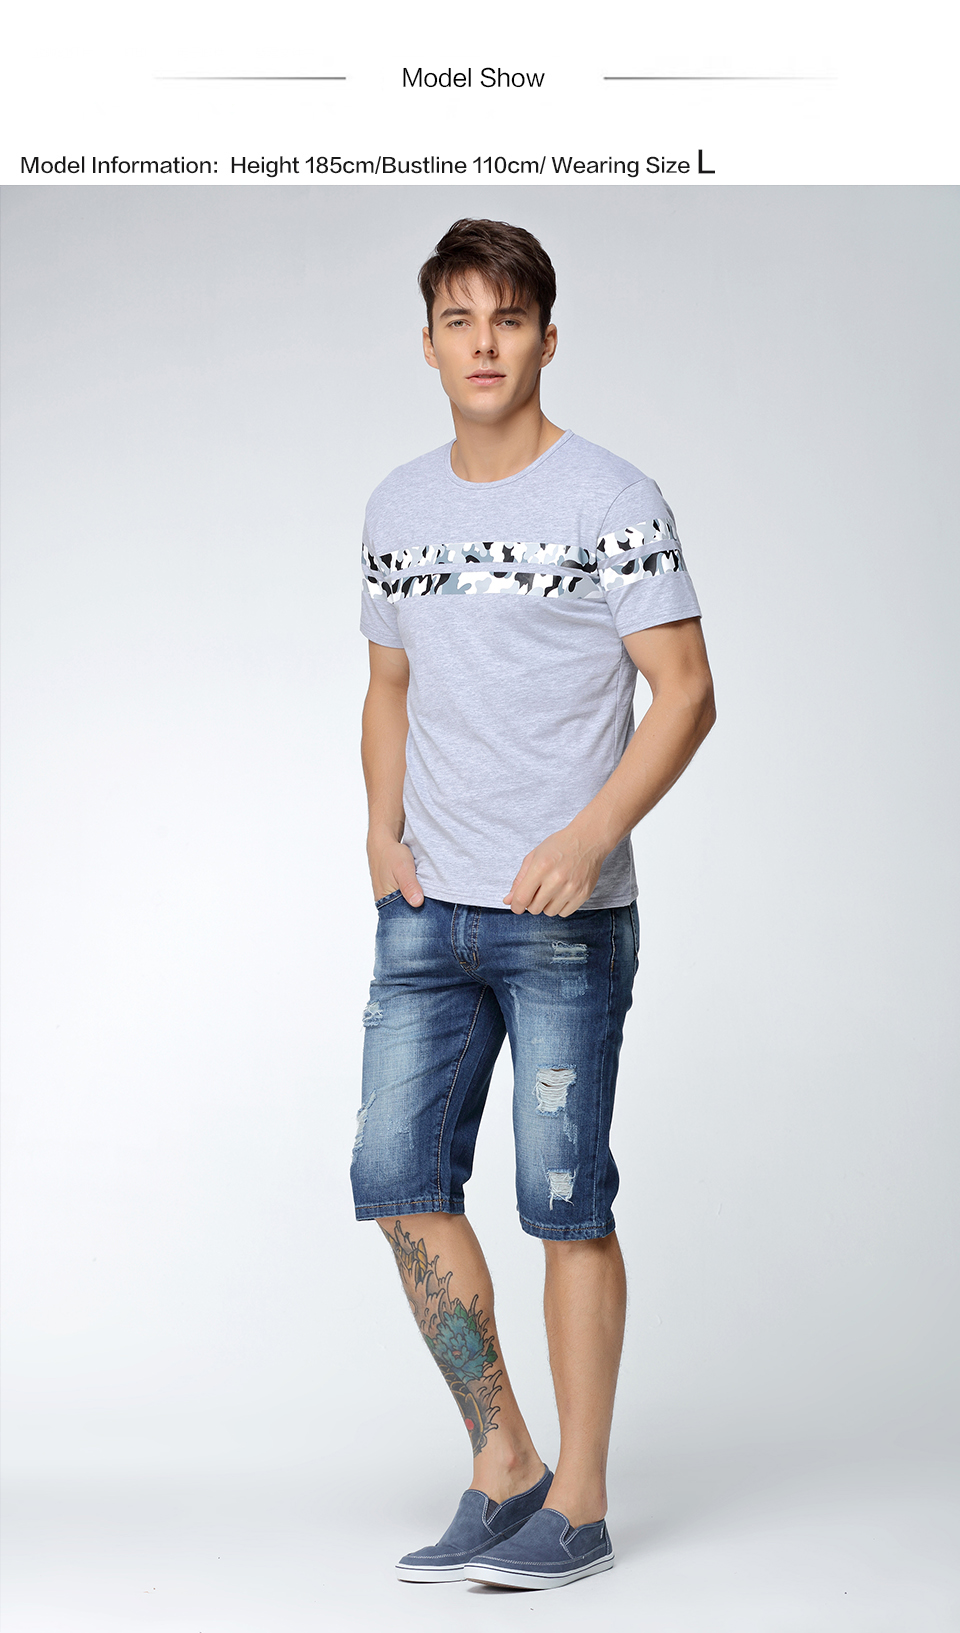 2017-Summer-Men39s-T-shirt-Fashion-Casual-printing-Short-Sleeve-Elasticity-T-shirt-SizeM-2XL-V7S1T07-32799500820